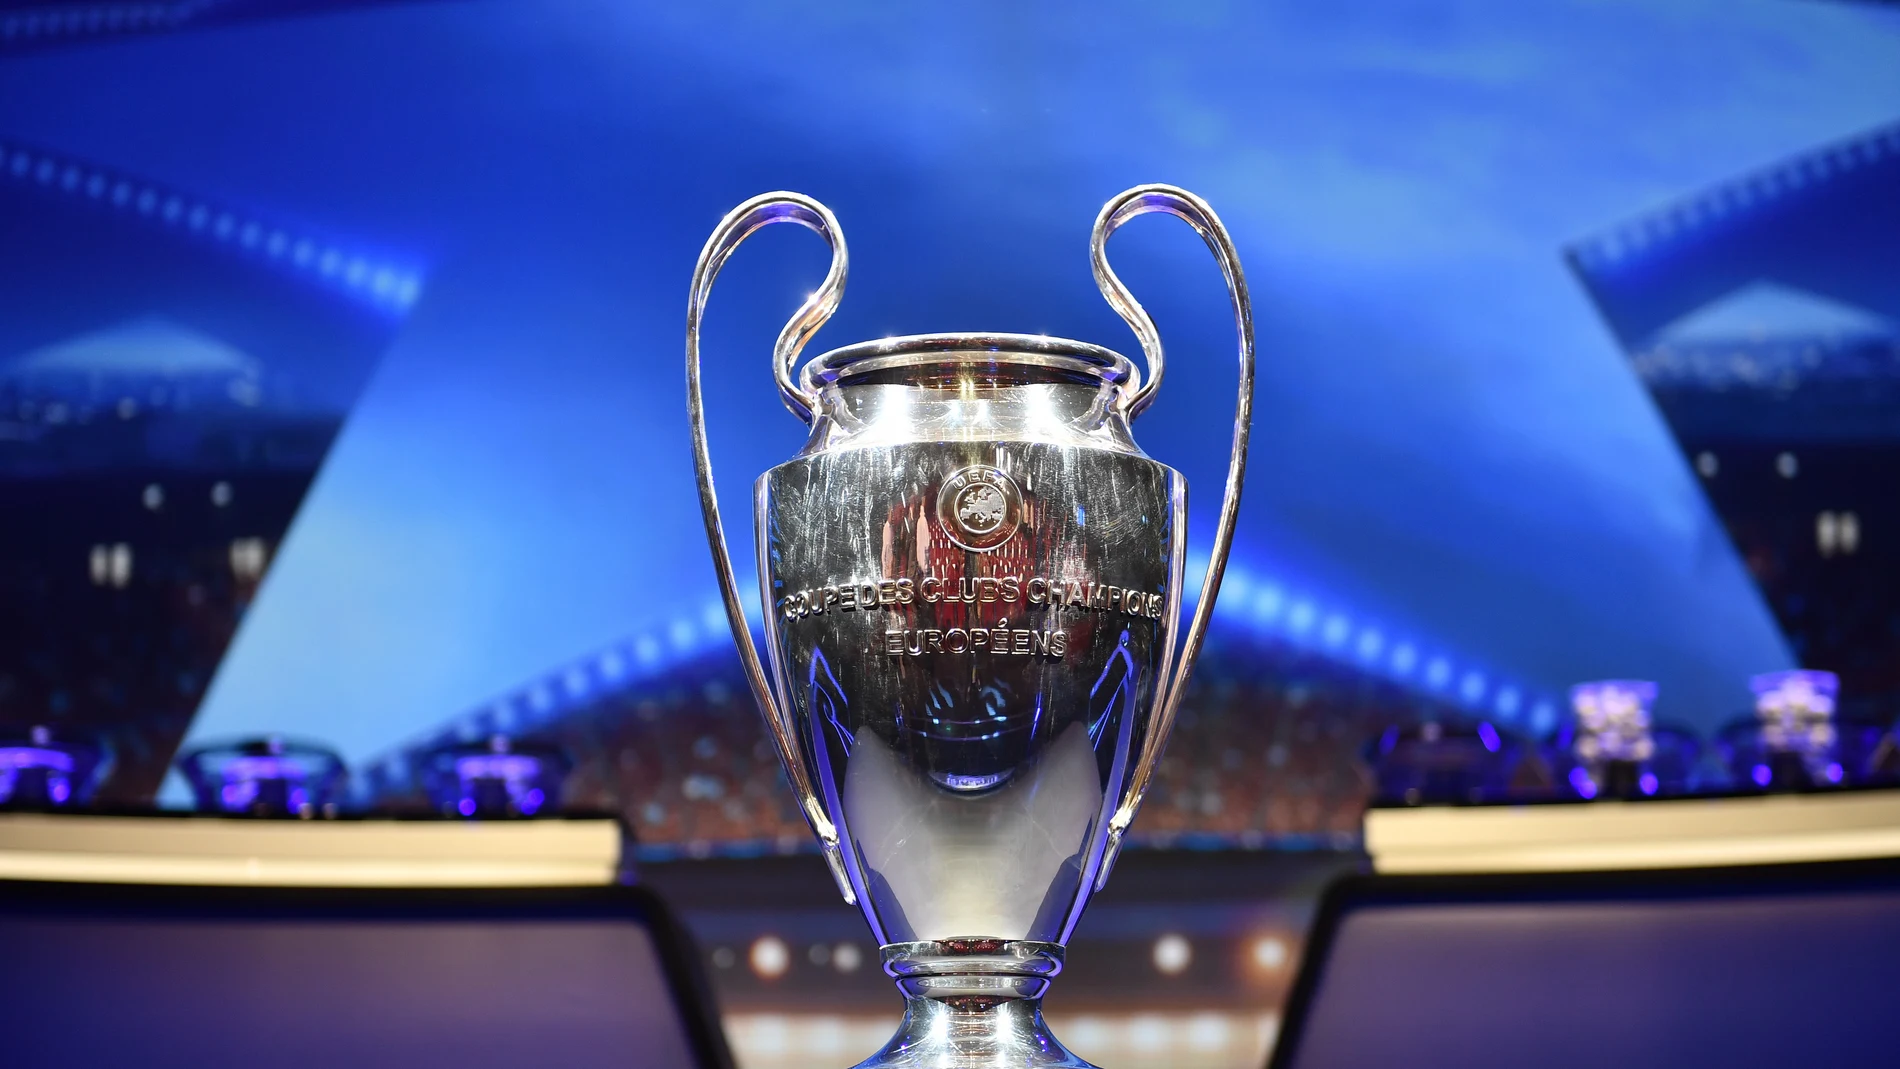 Calendario Champions League: fechas partidos de la temporada 2019/2020